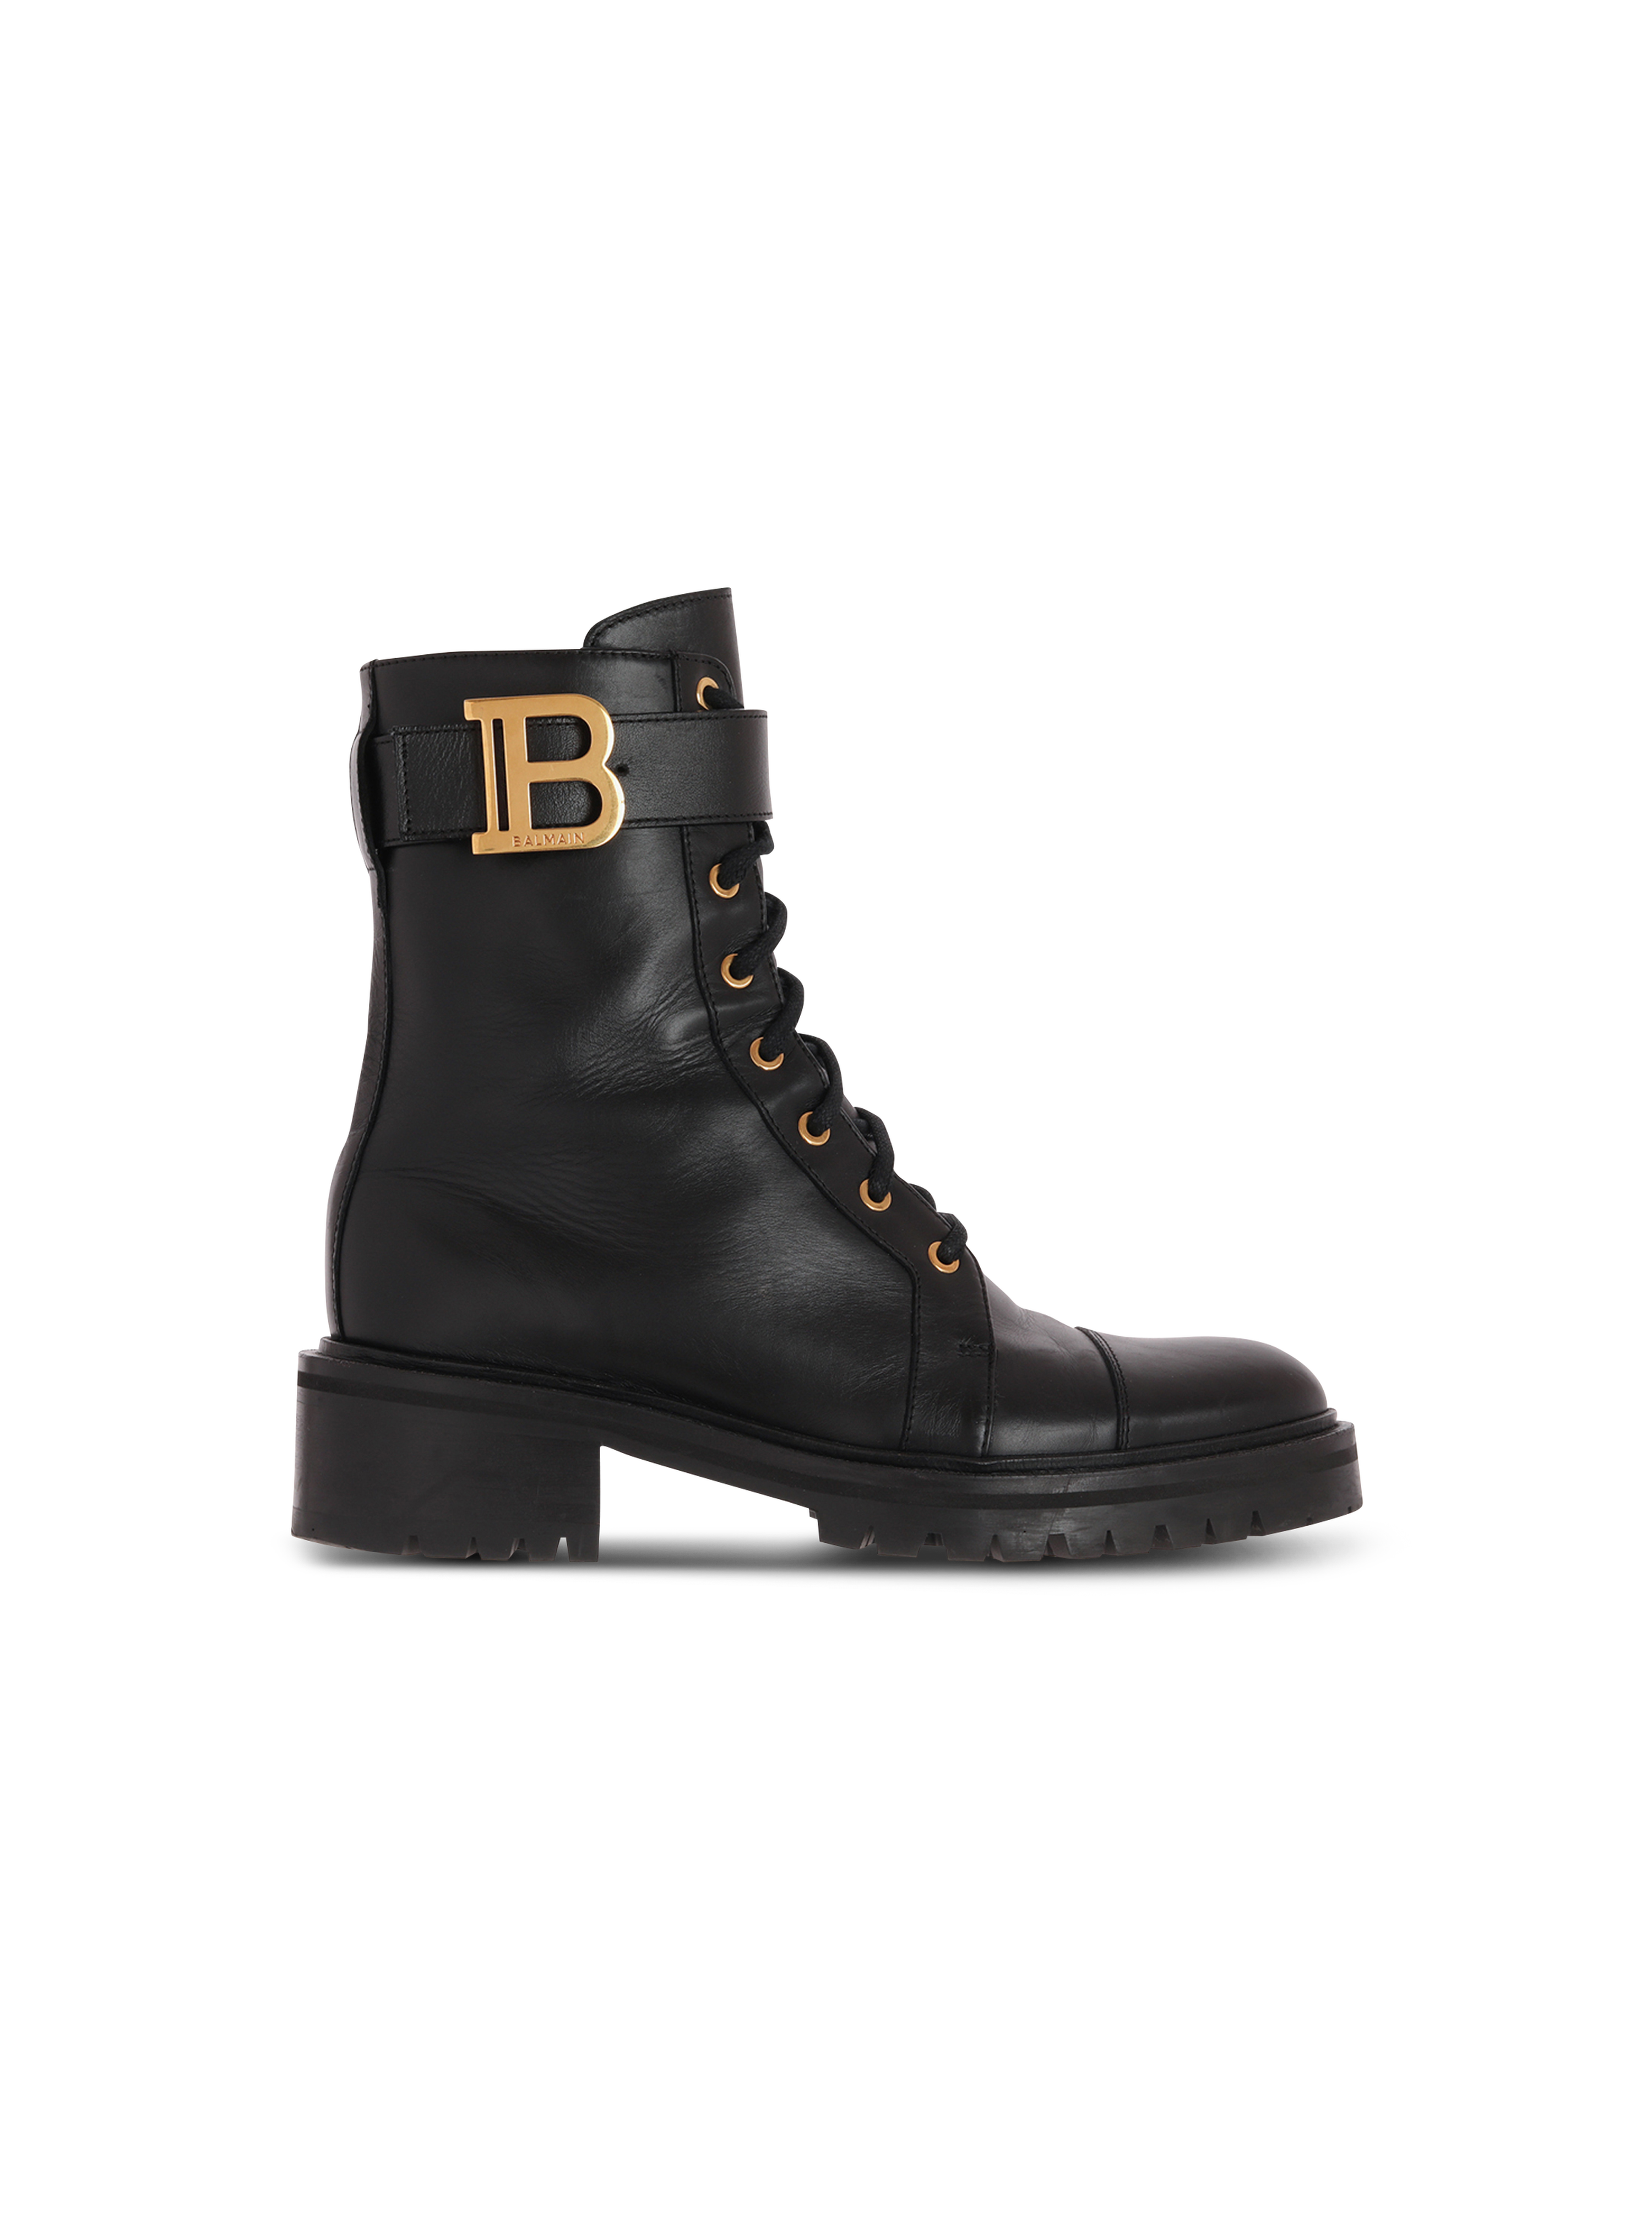 Leather Ranger Romy ankle boots, black